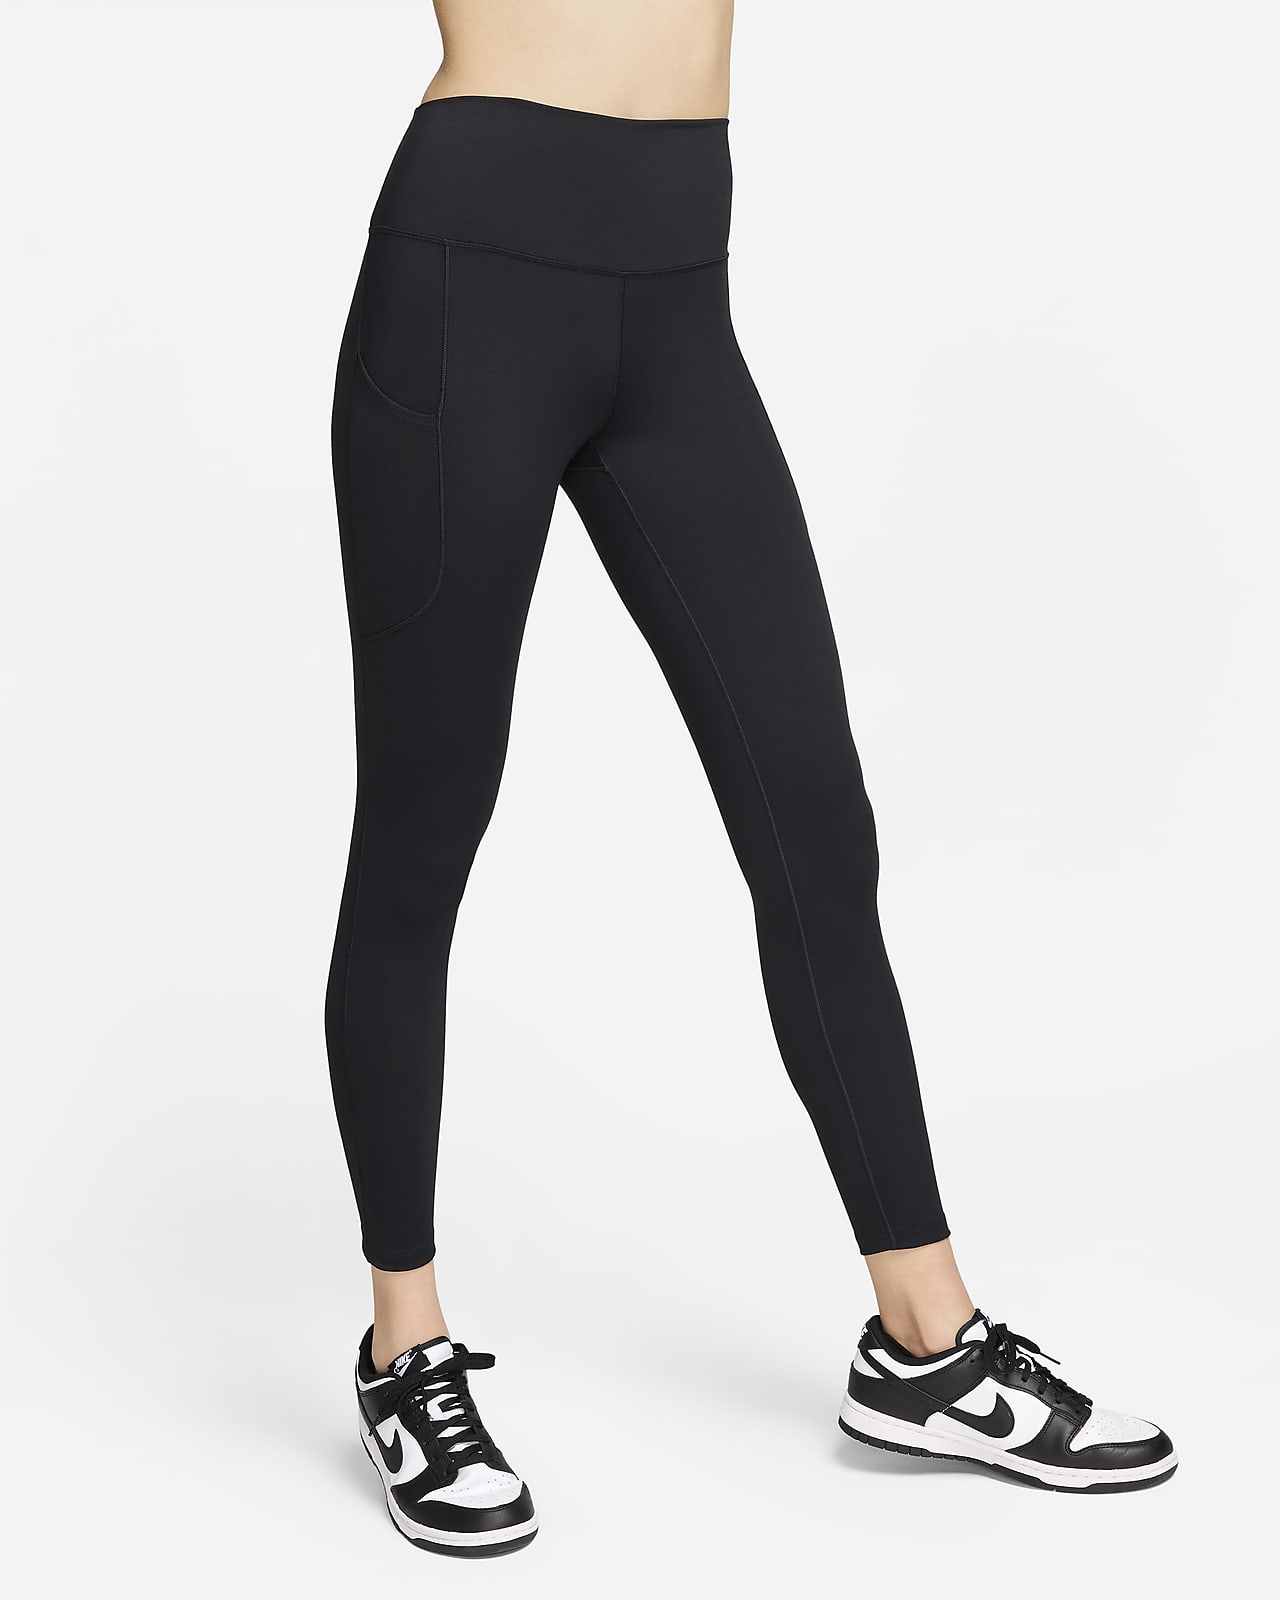 Nike Pro Women's High-Waisted 7/8 Training Leggings with Pockets. Nike LU